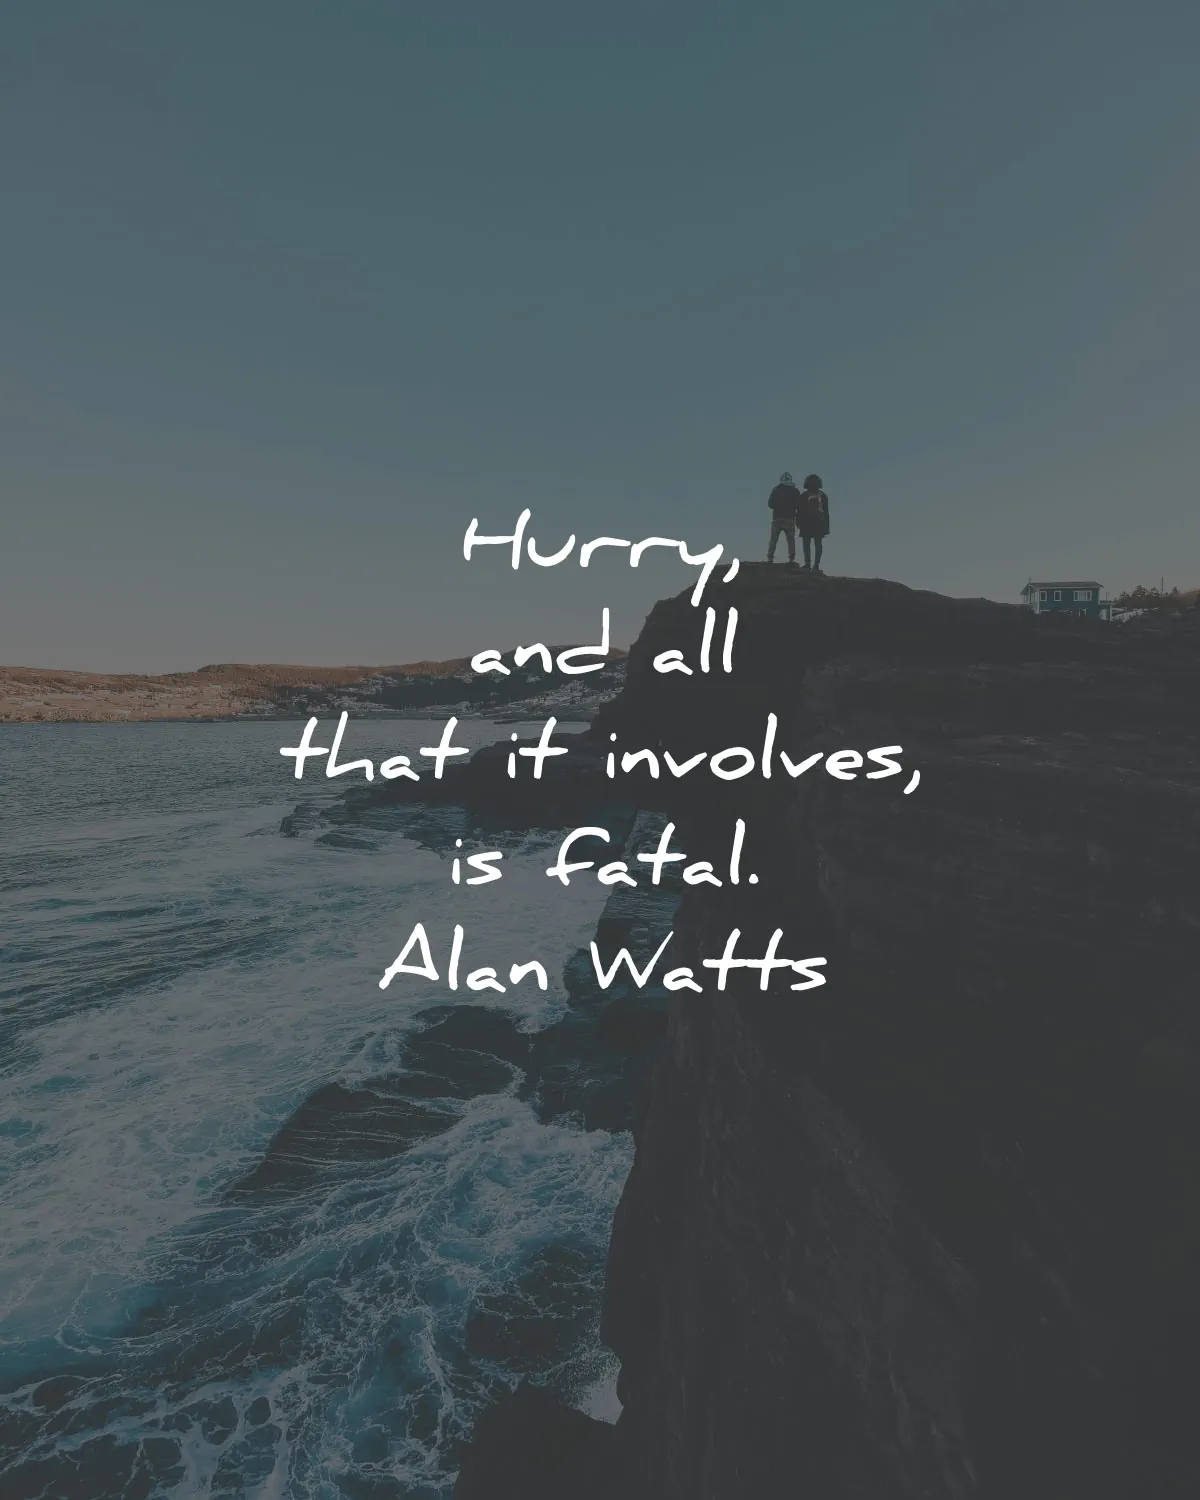 alan watts quotes hurry involves fatal wisdom